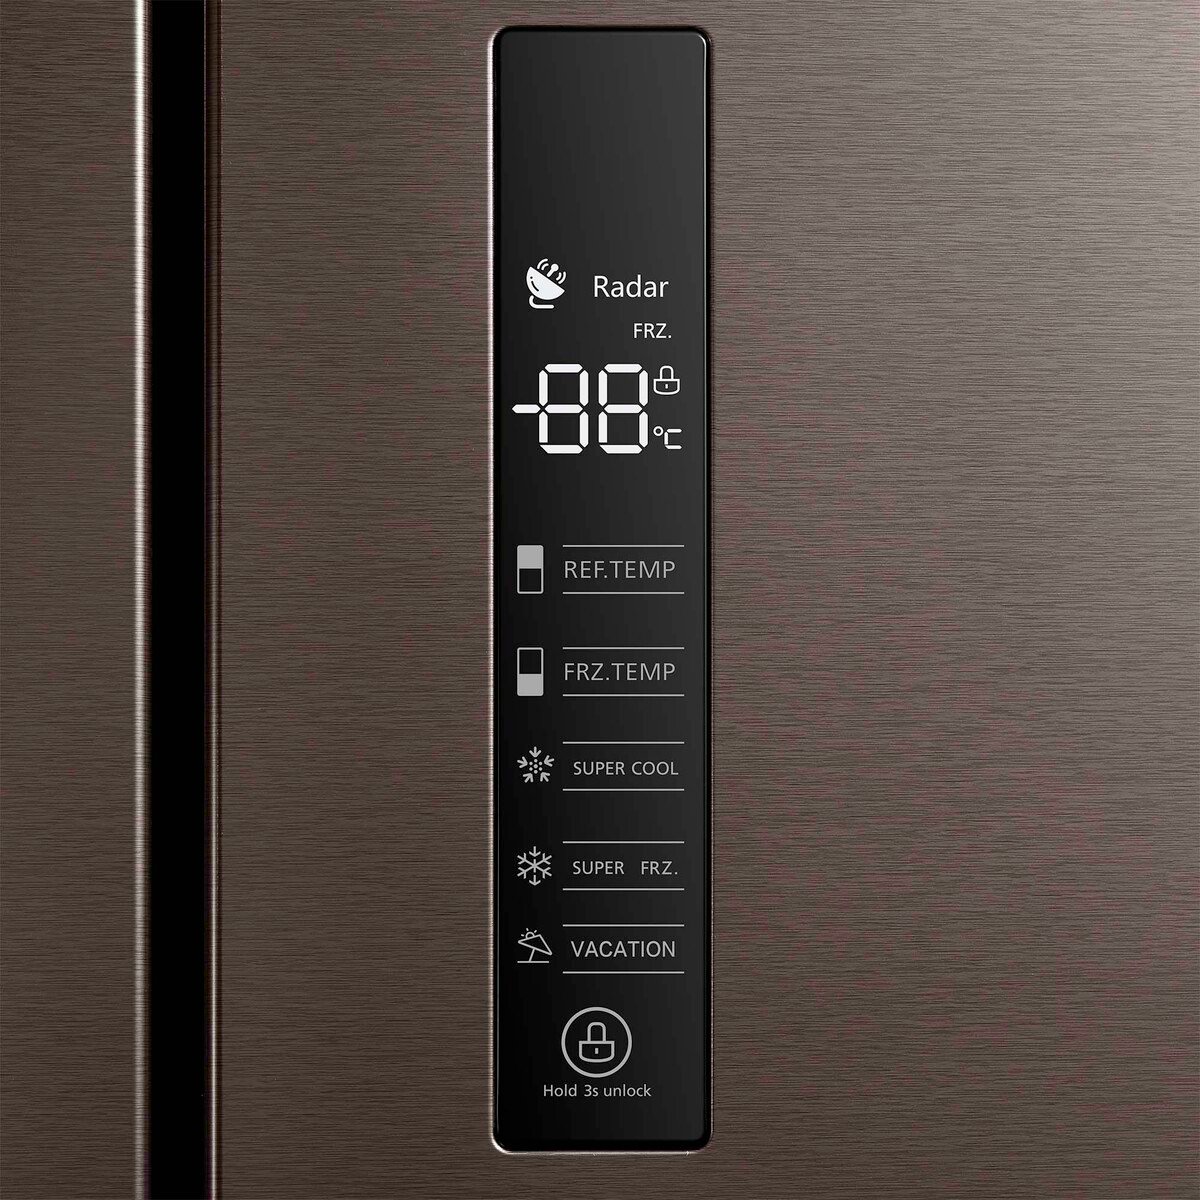 Toshiba French Door Refrigerator GR-RF610WE-PME, Gross 556 Ltr/Net 511 Ltr, Satin Grey